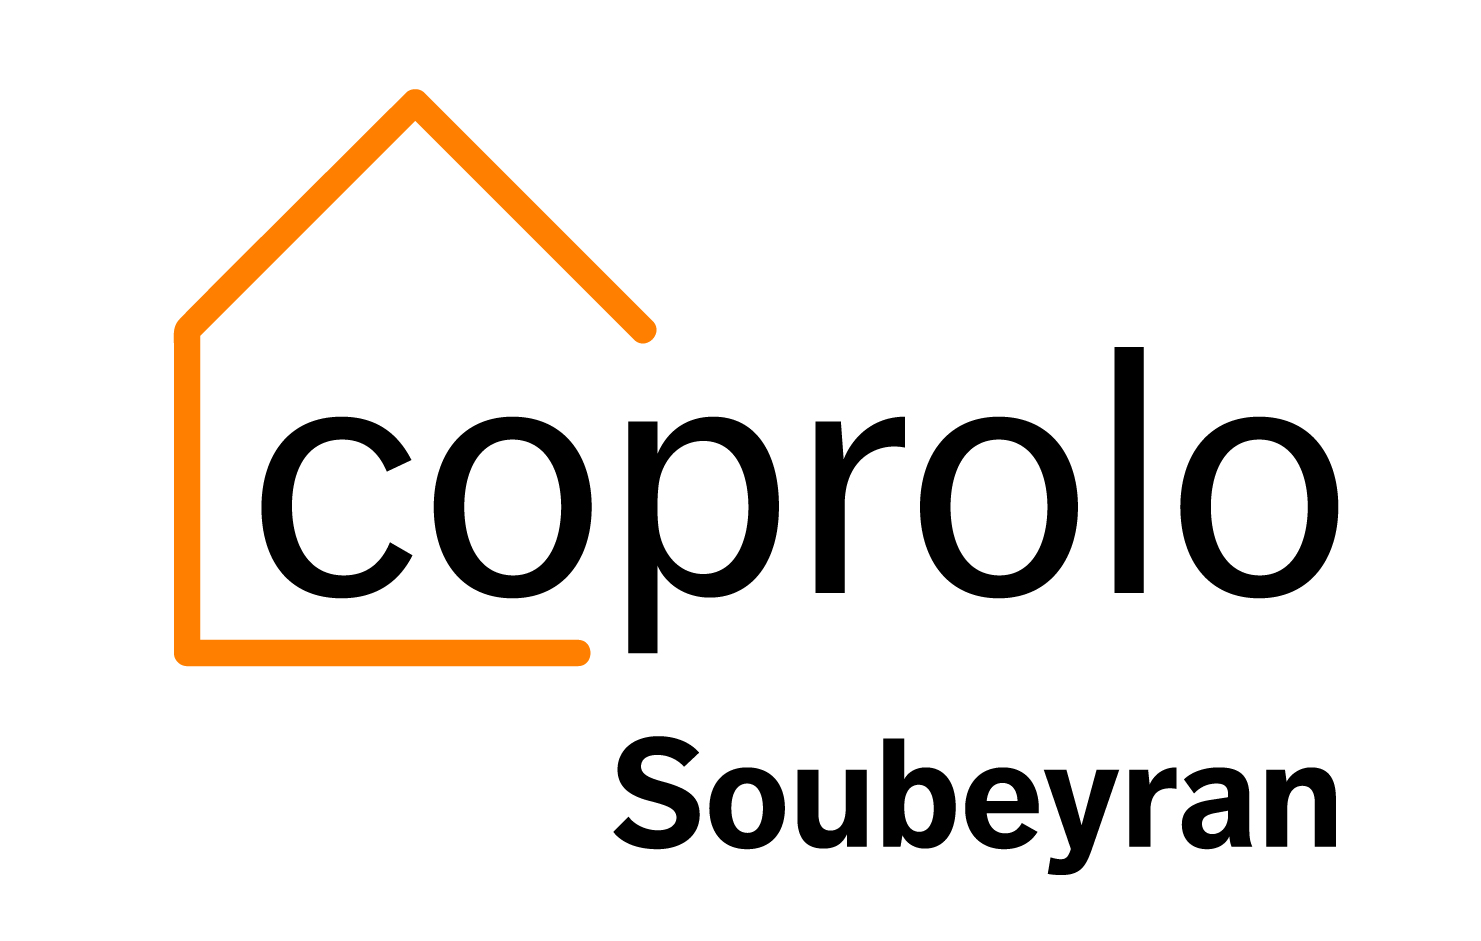 Coprolo Soubeyran